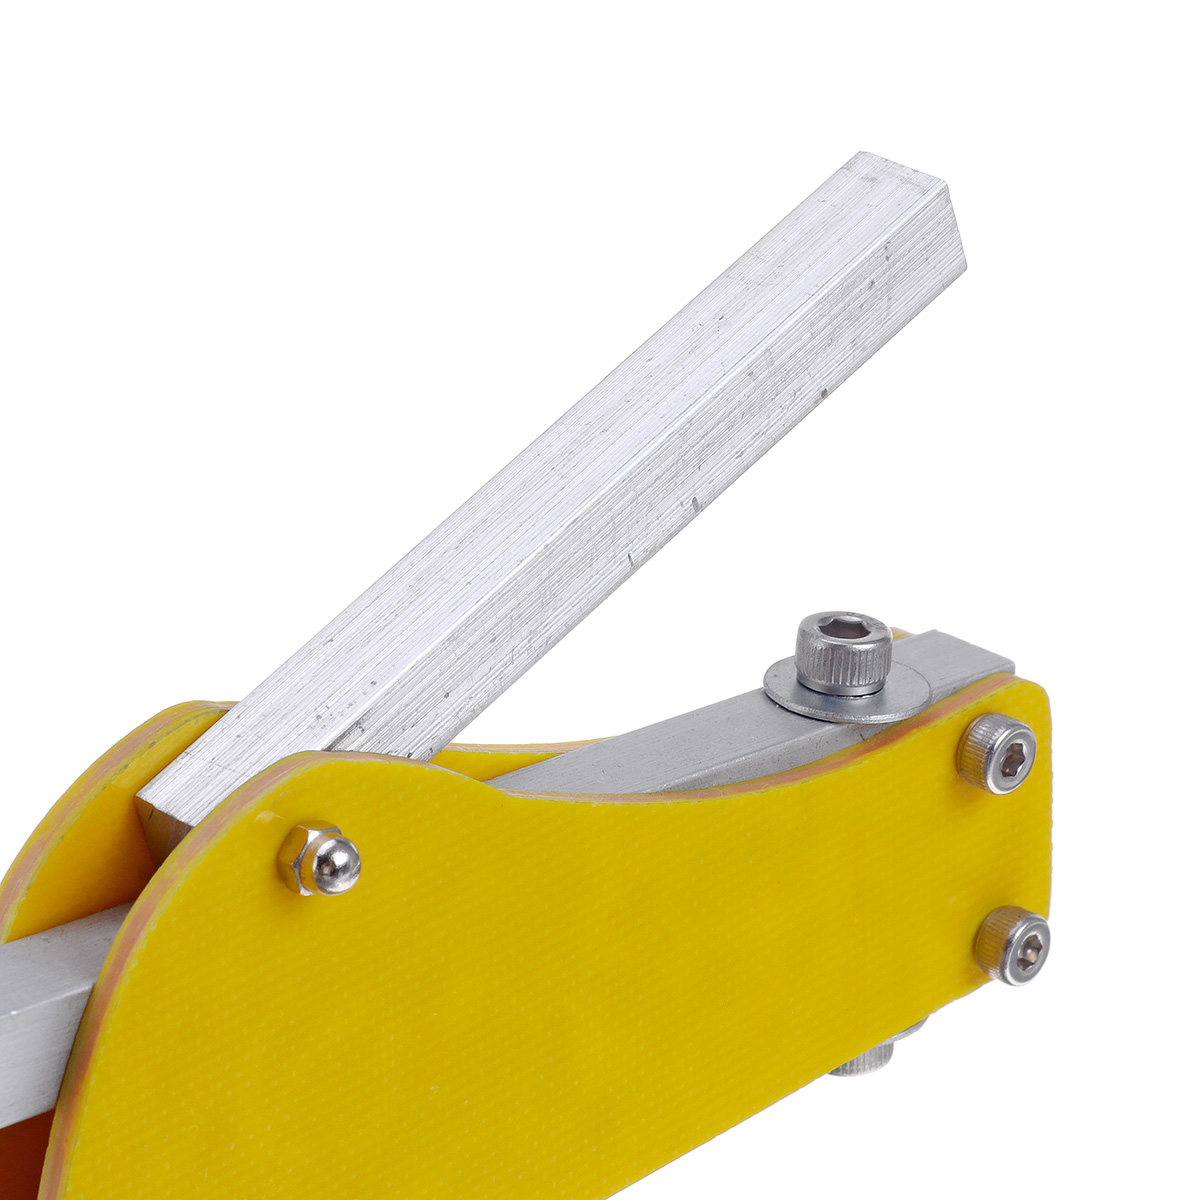 Portable-Spot-Welder-Special-Shape-Metal-Welding-Pliers-18650-Battery-Spot-Welder-Accessories-Metal--1847767-11